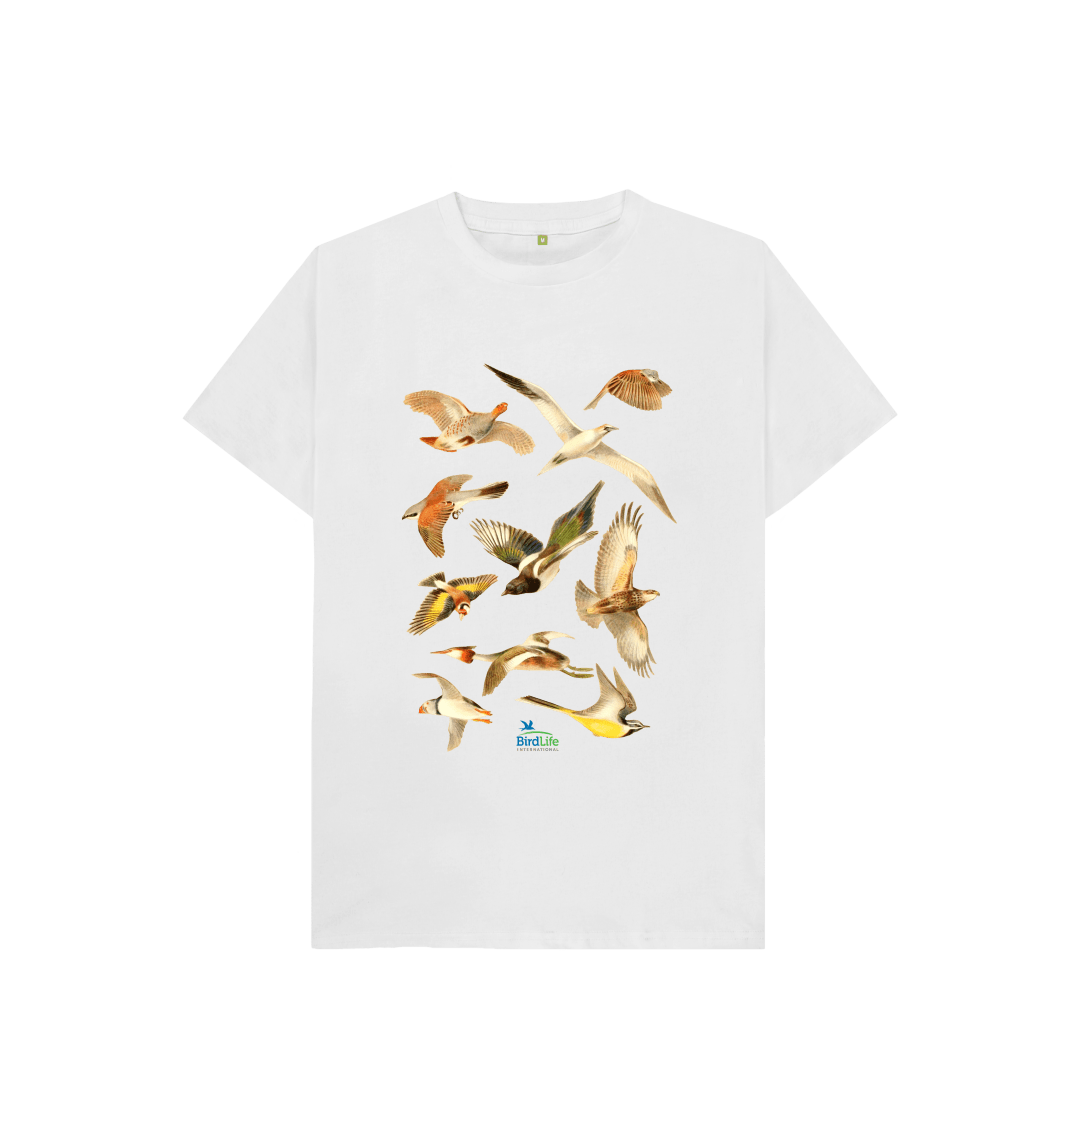 Kleding Unisex kinderkleding Tops & T-shirts T-shirts T-shirts met print vintage 80s tee BERMUDA LONGTAIL vogel korte mouwen sweatshirt Kinder Medium 10 12 